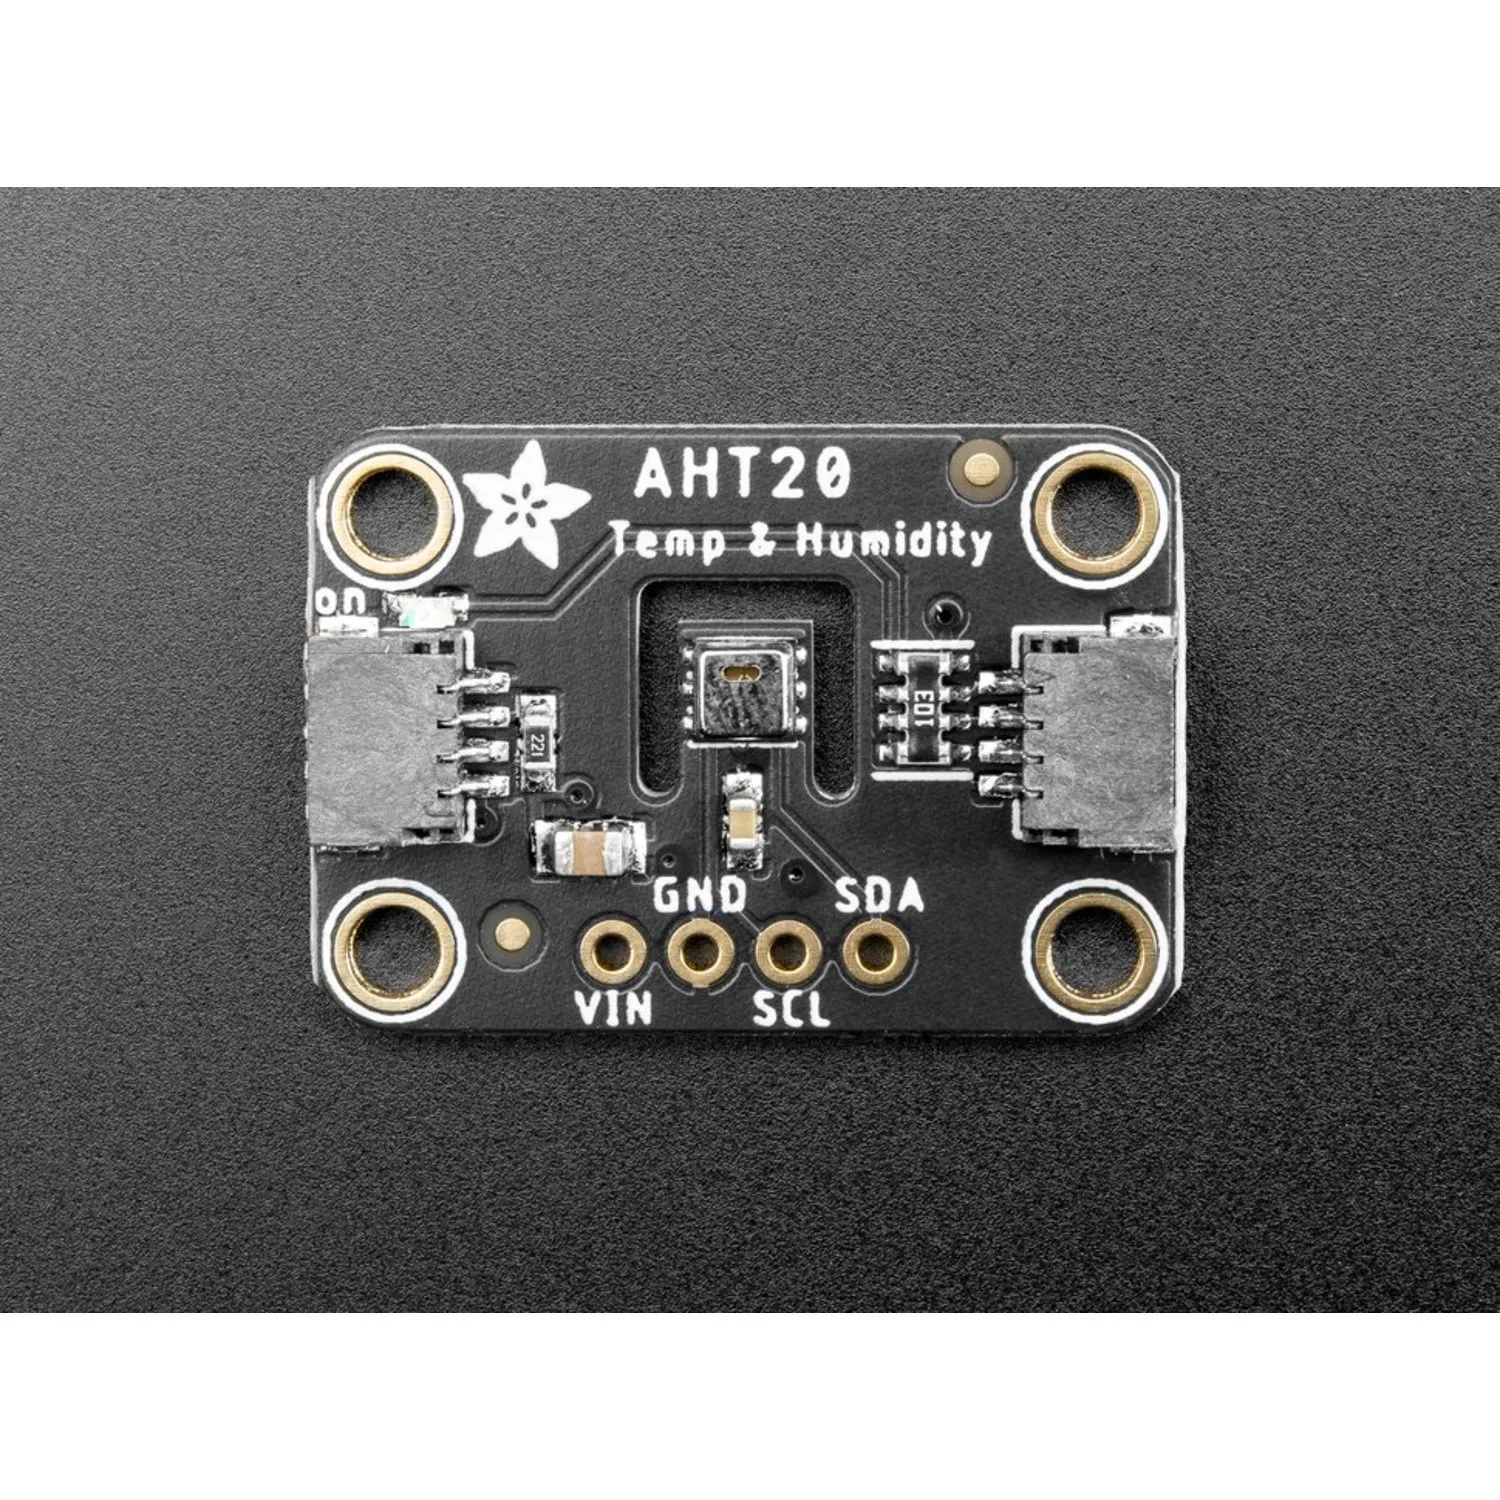 Photo of Adafruit AHT20 - Temperature  Humidity Sensor Breakout Board - STEMMA QT / Qwiic